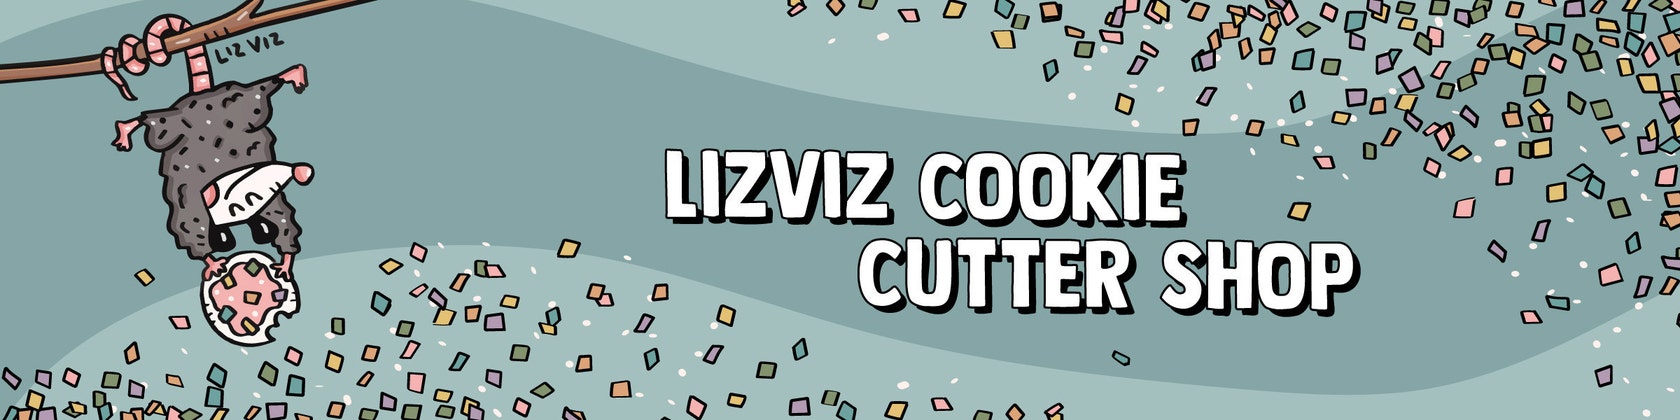 Mardi Gras Cookie Cutter. Snow cone Cookie Cutter. – LizViz